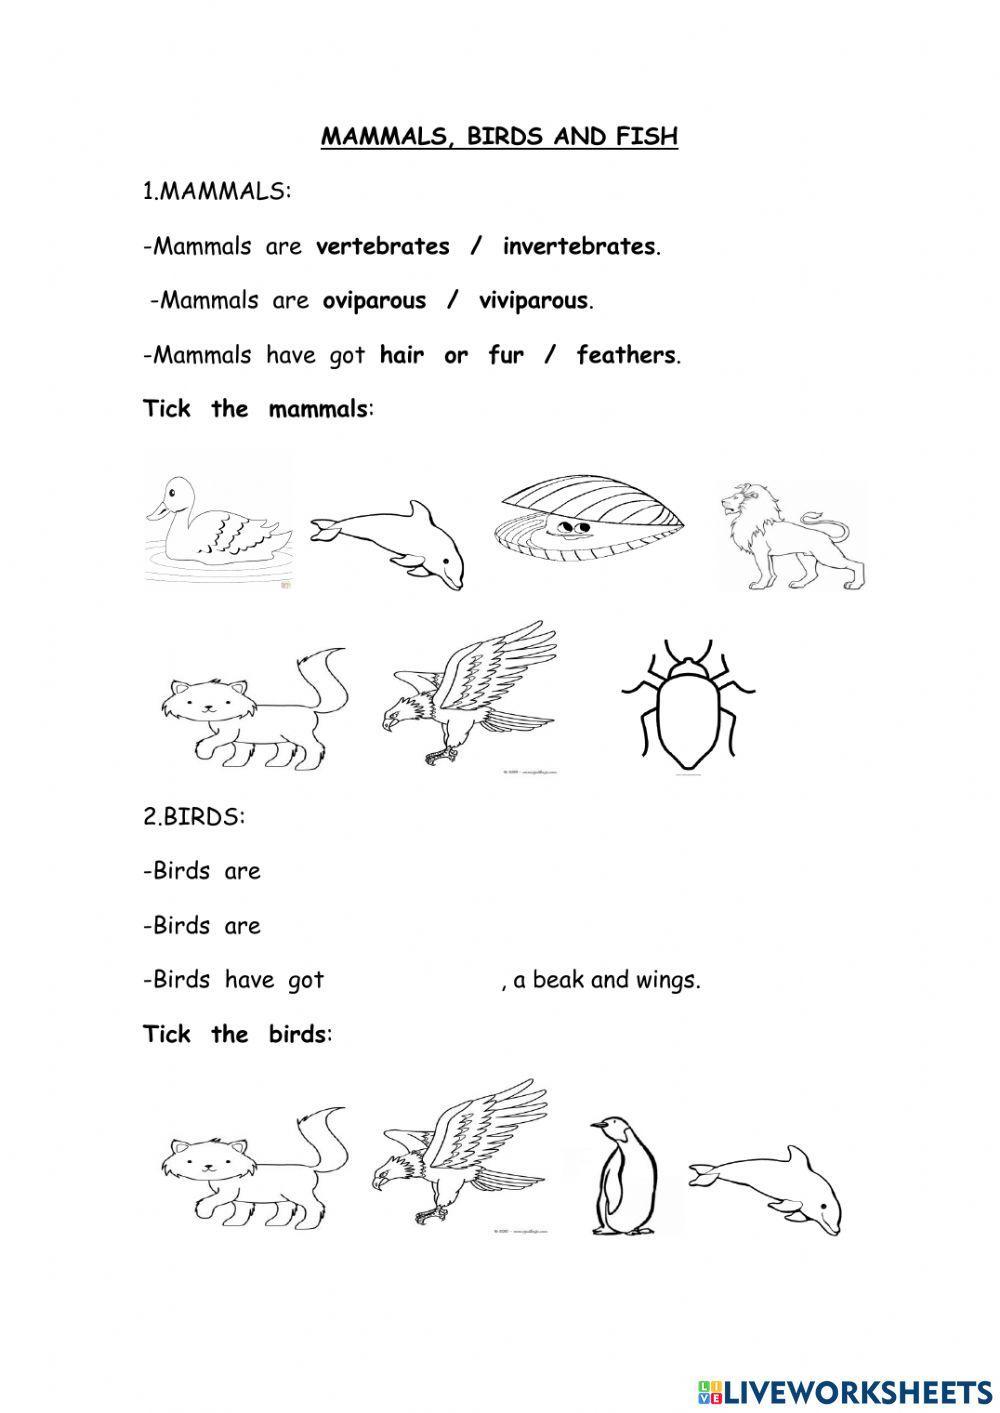 Mammals, birds and fish